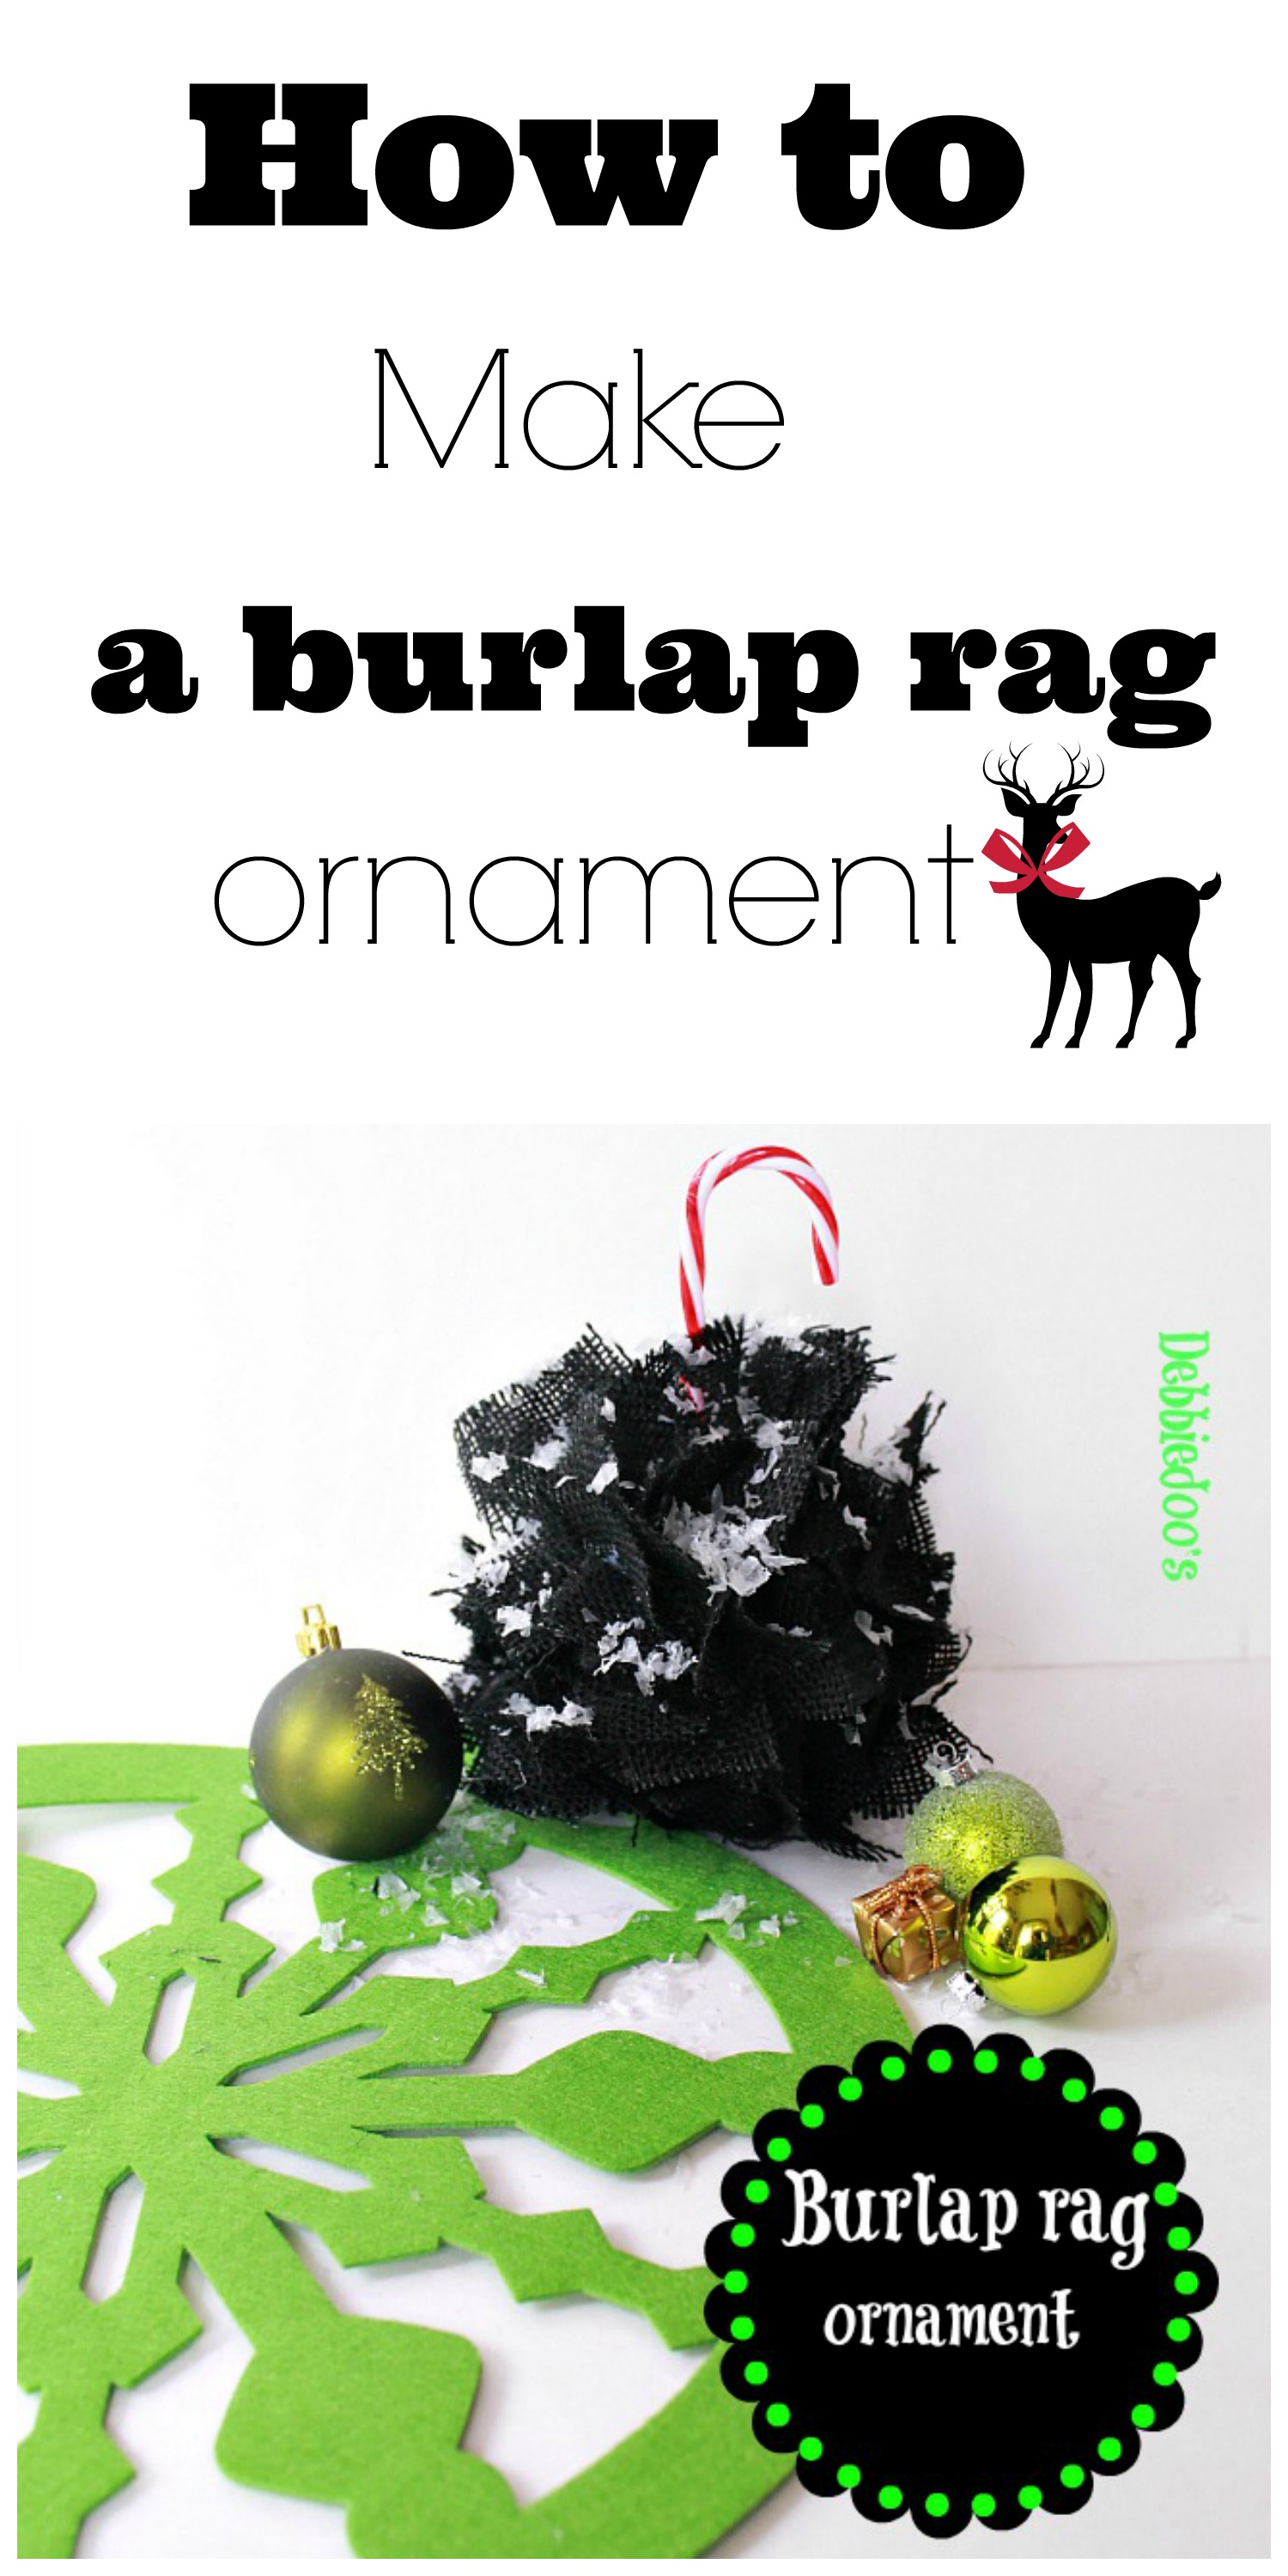 How to make a burlap rag ornament